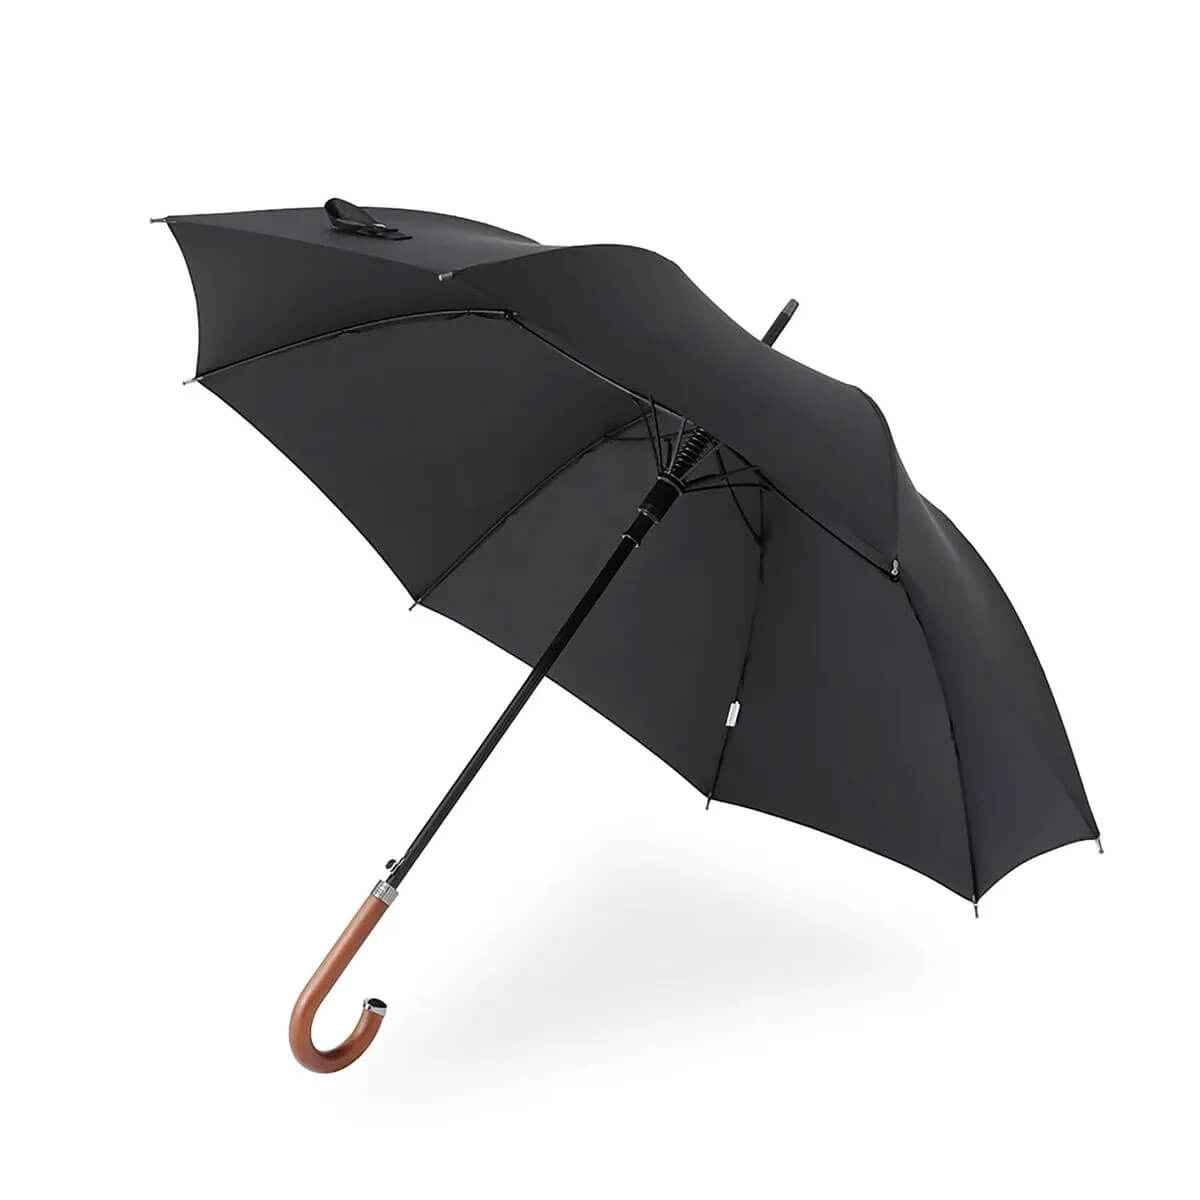 Enchanted Rain Umbrella - Protective Canopy